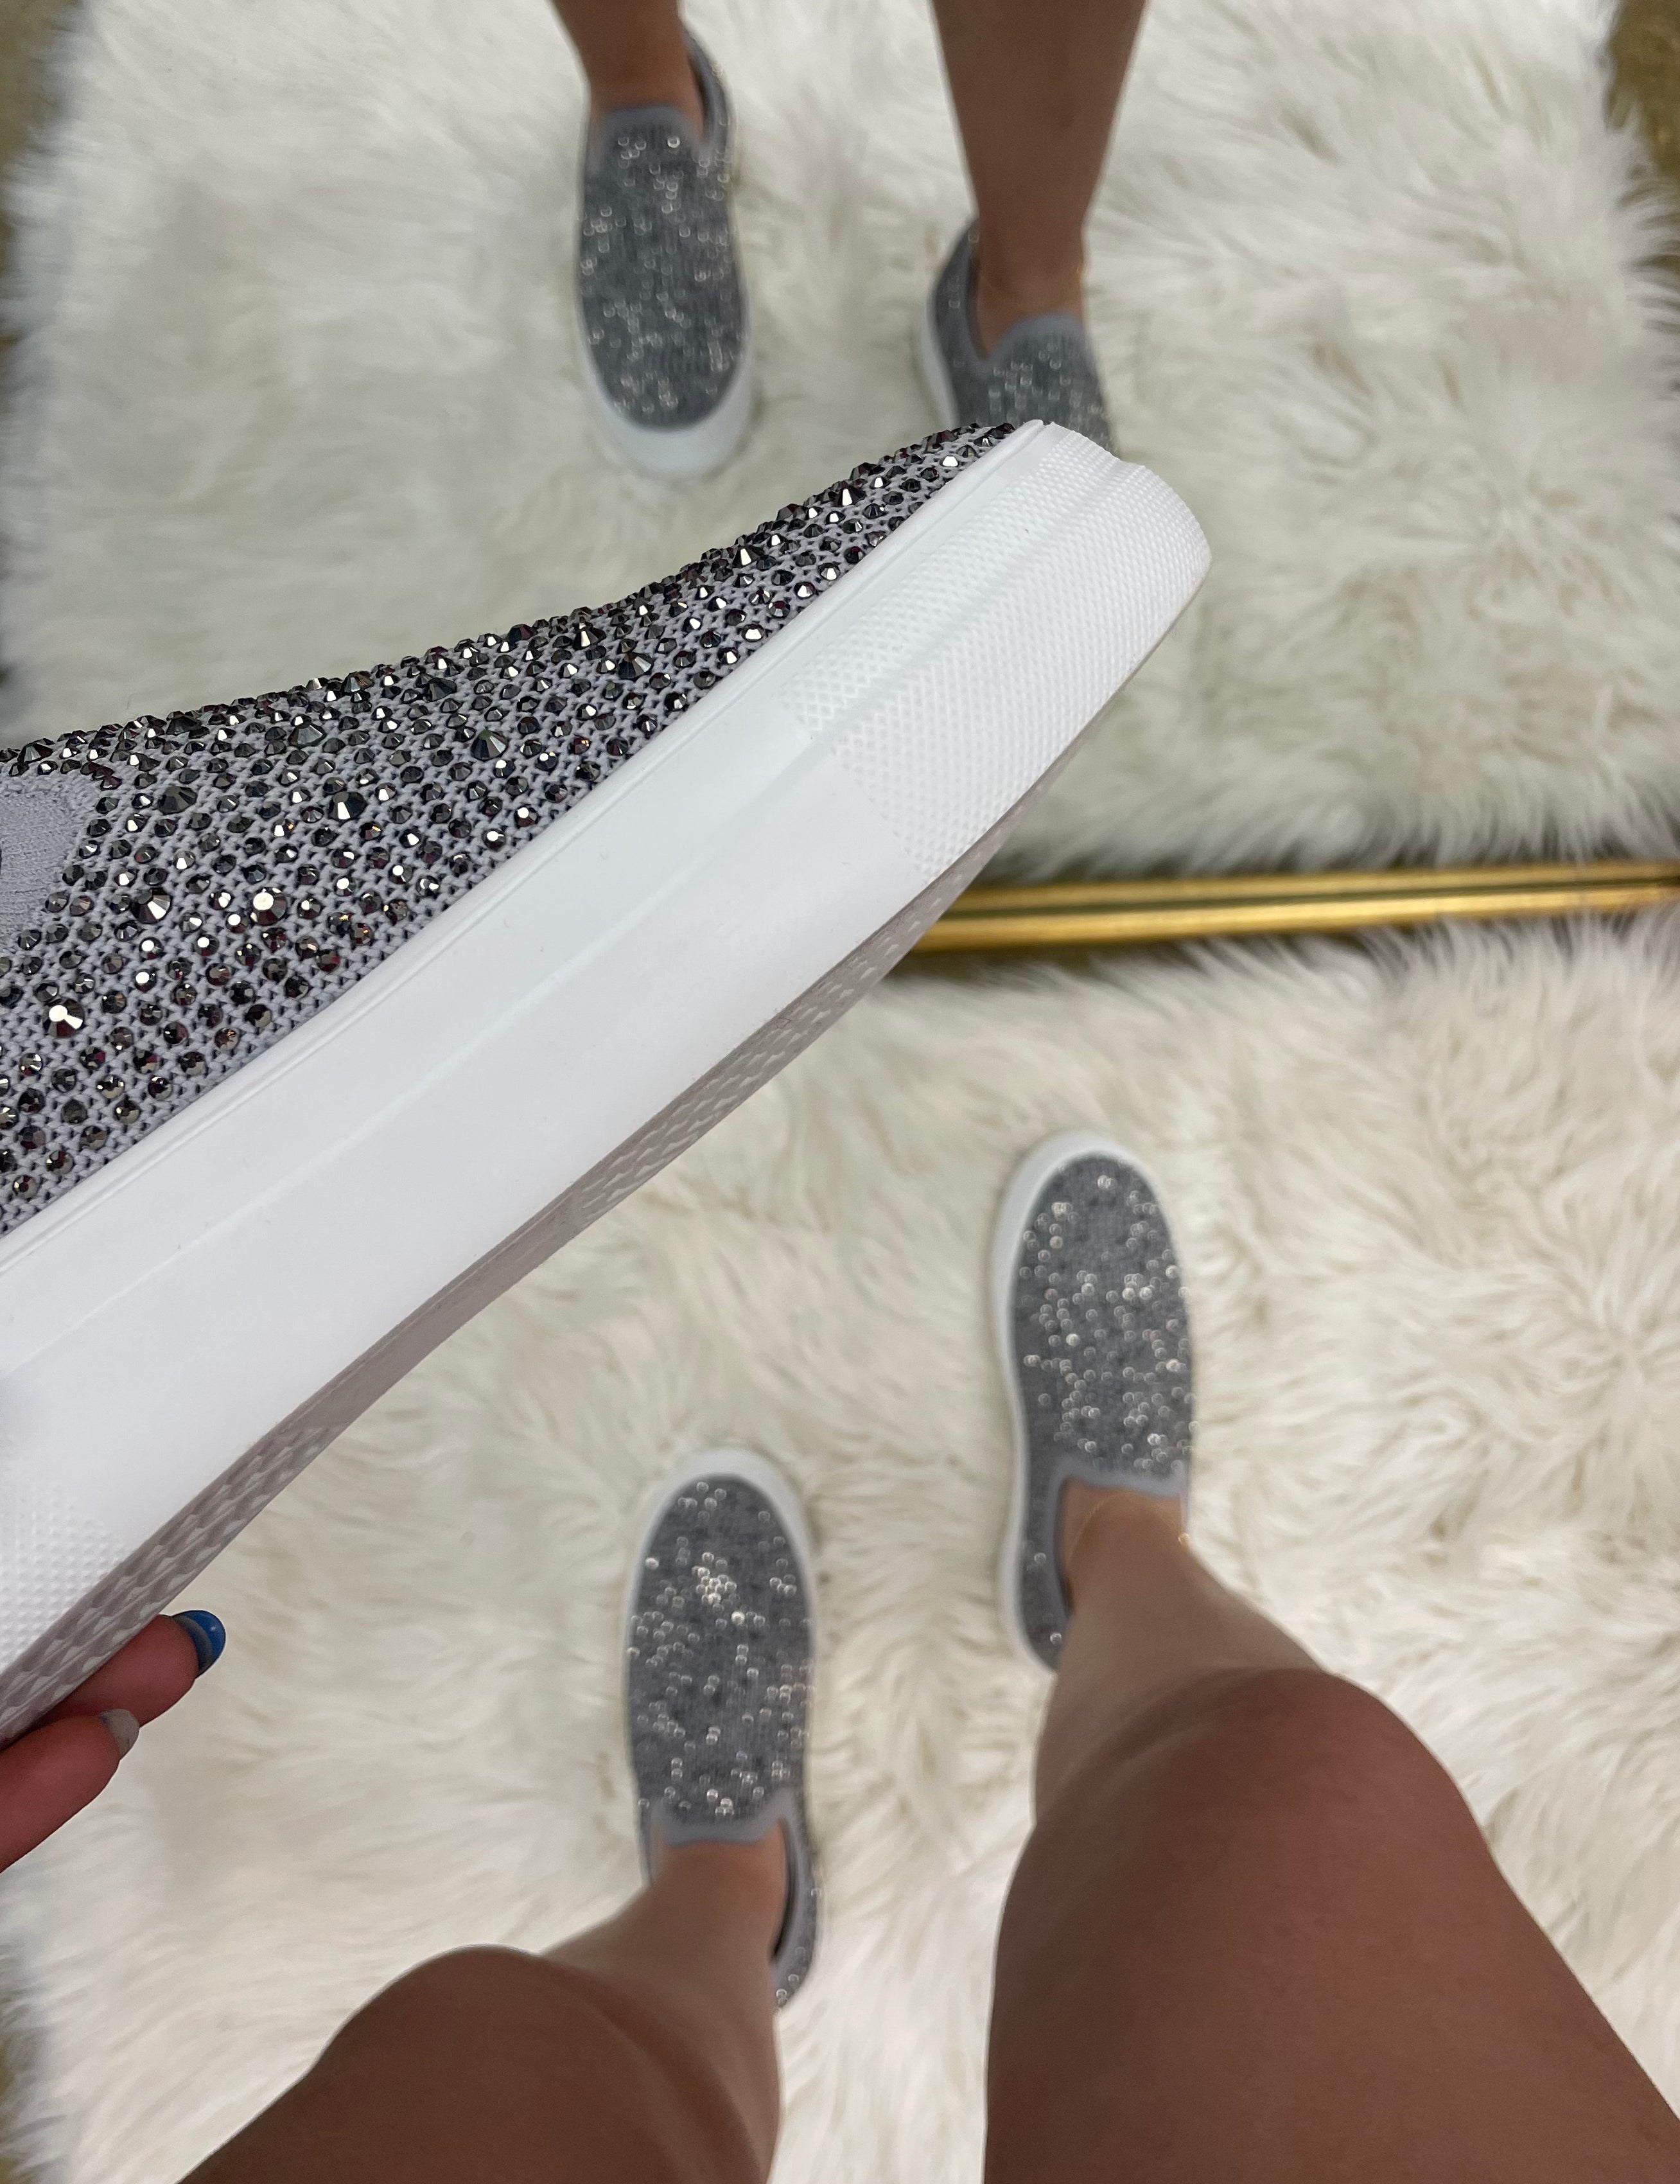 Swanky Bling Sneaker in Grey Crystal